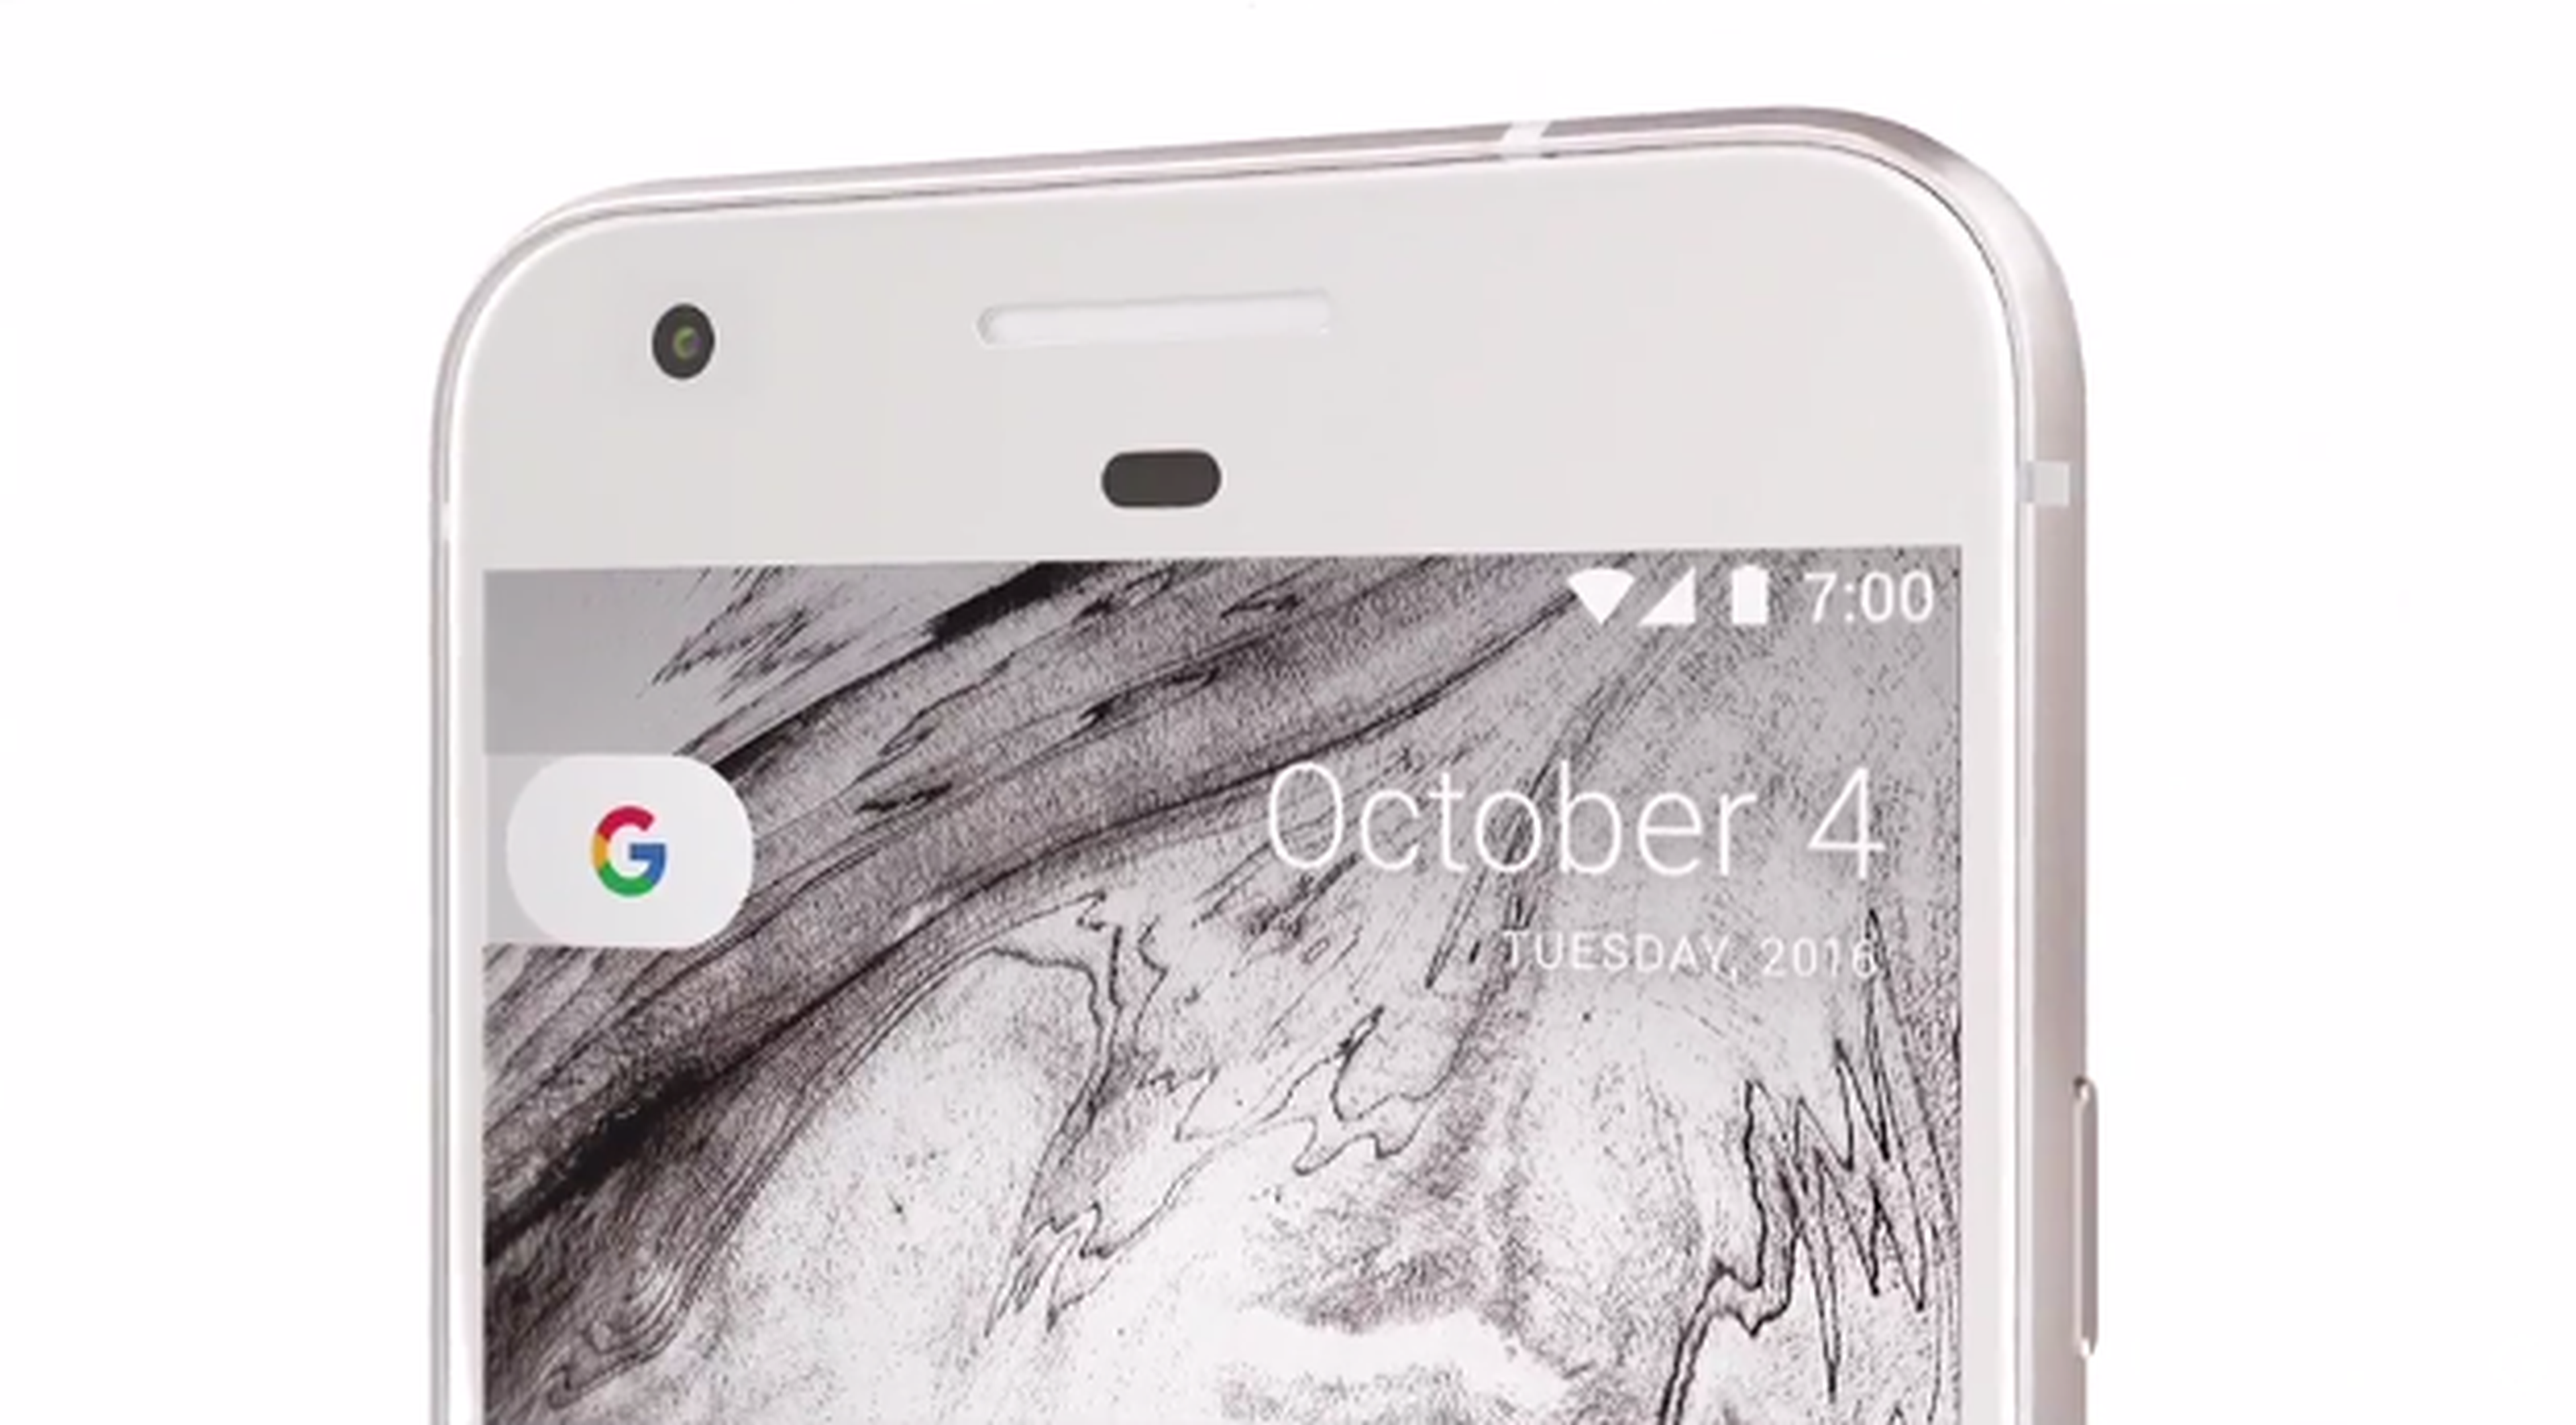 Google Pixel: características a la altura de los mejores móviles